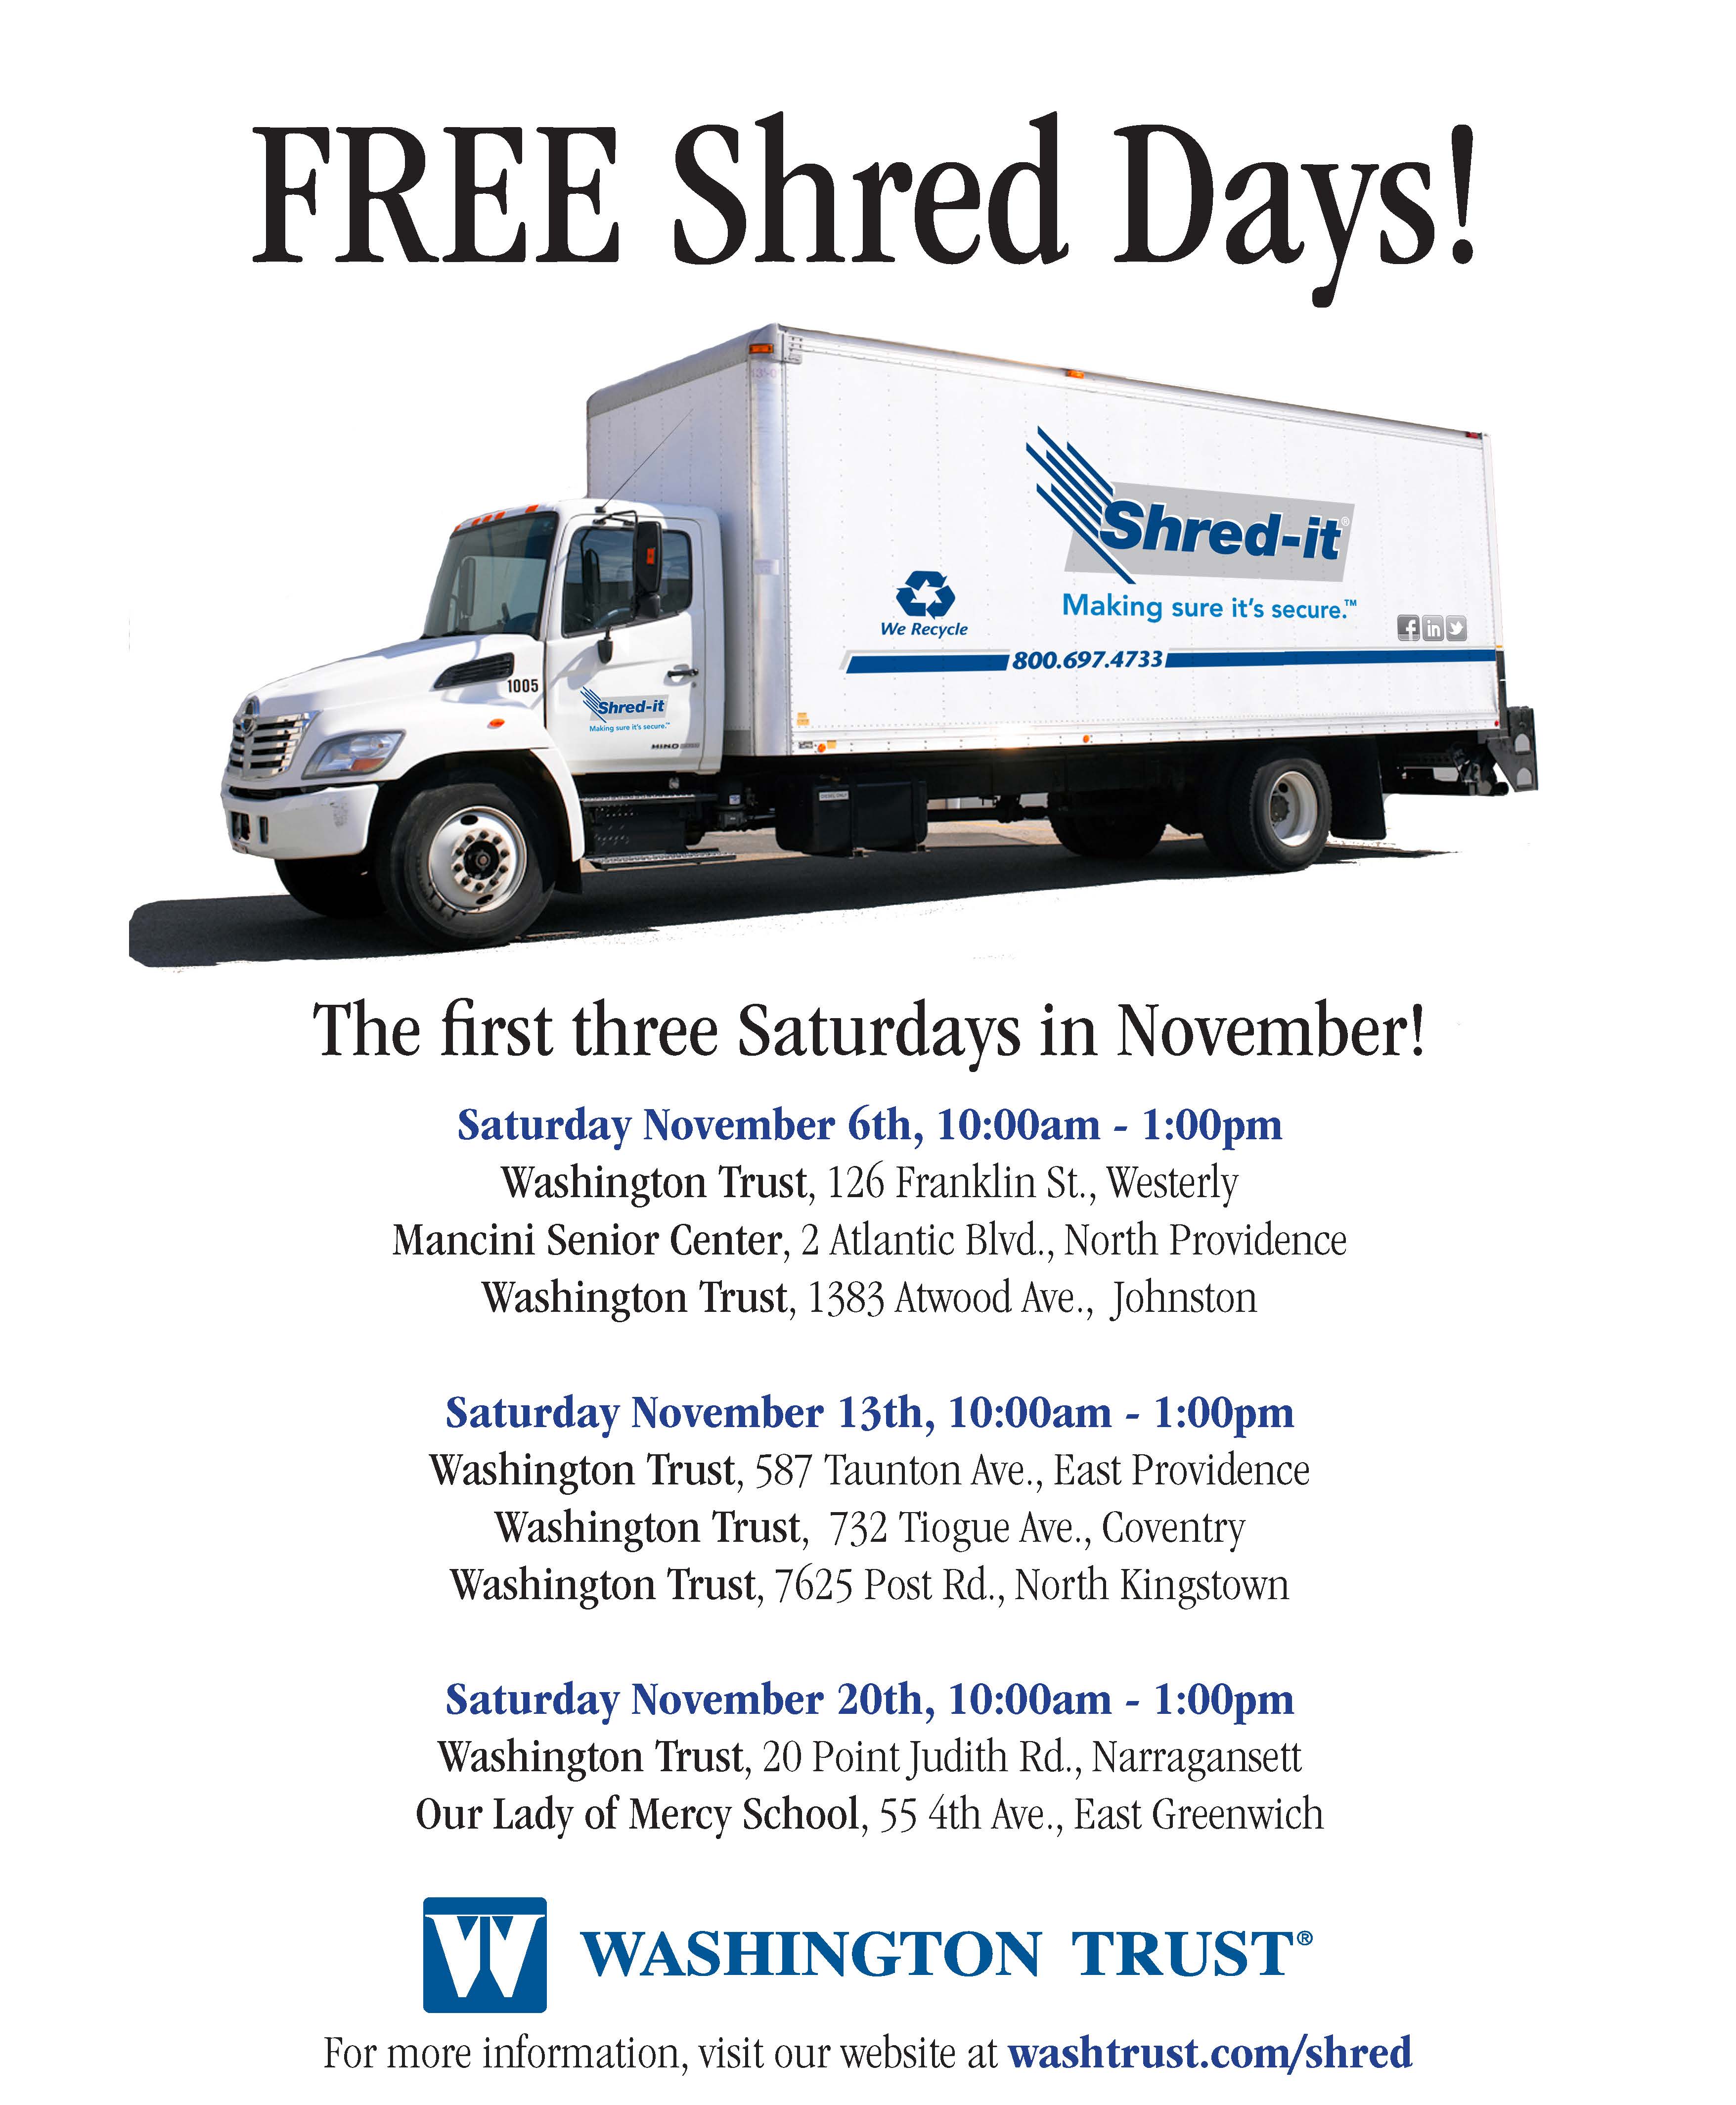 Washington Trust Bank is hosting Free Community Shred Days